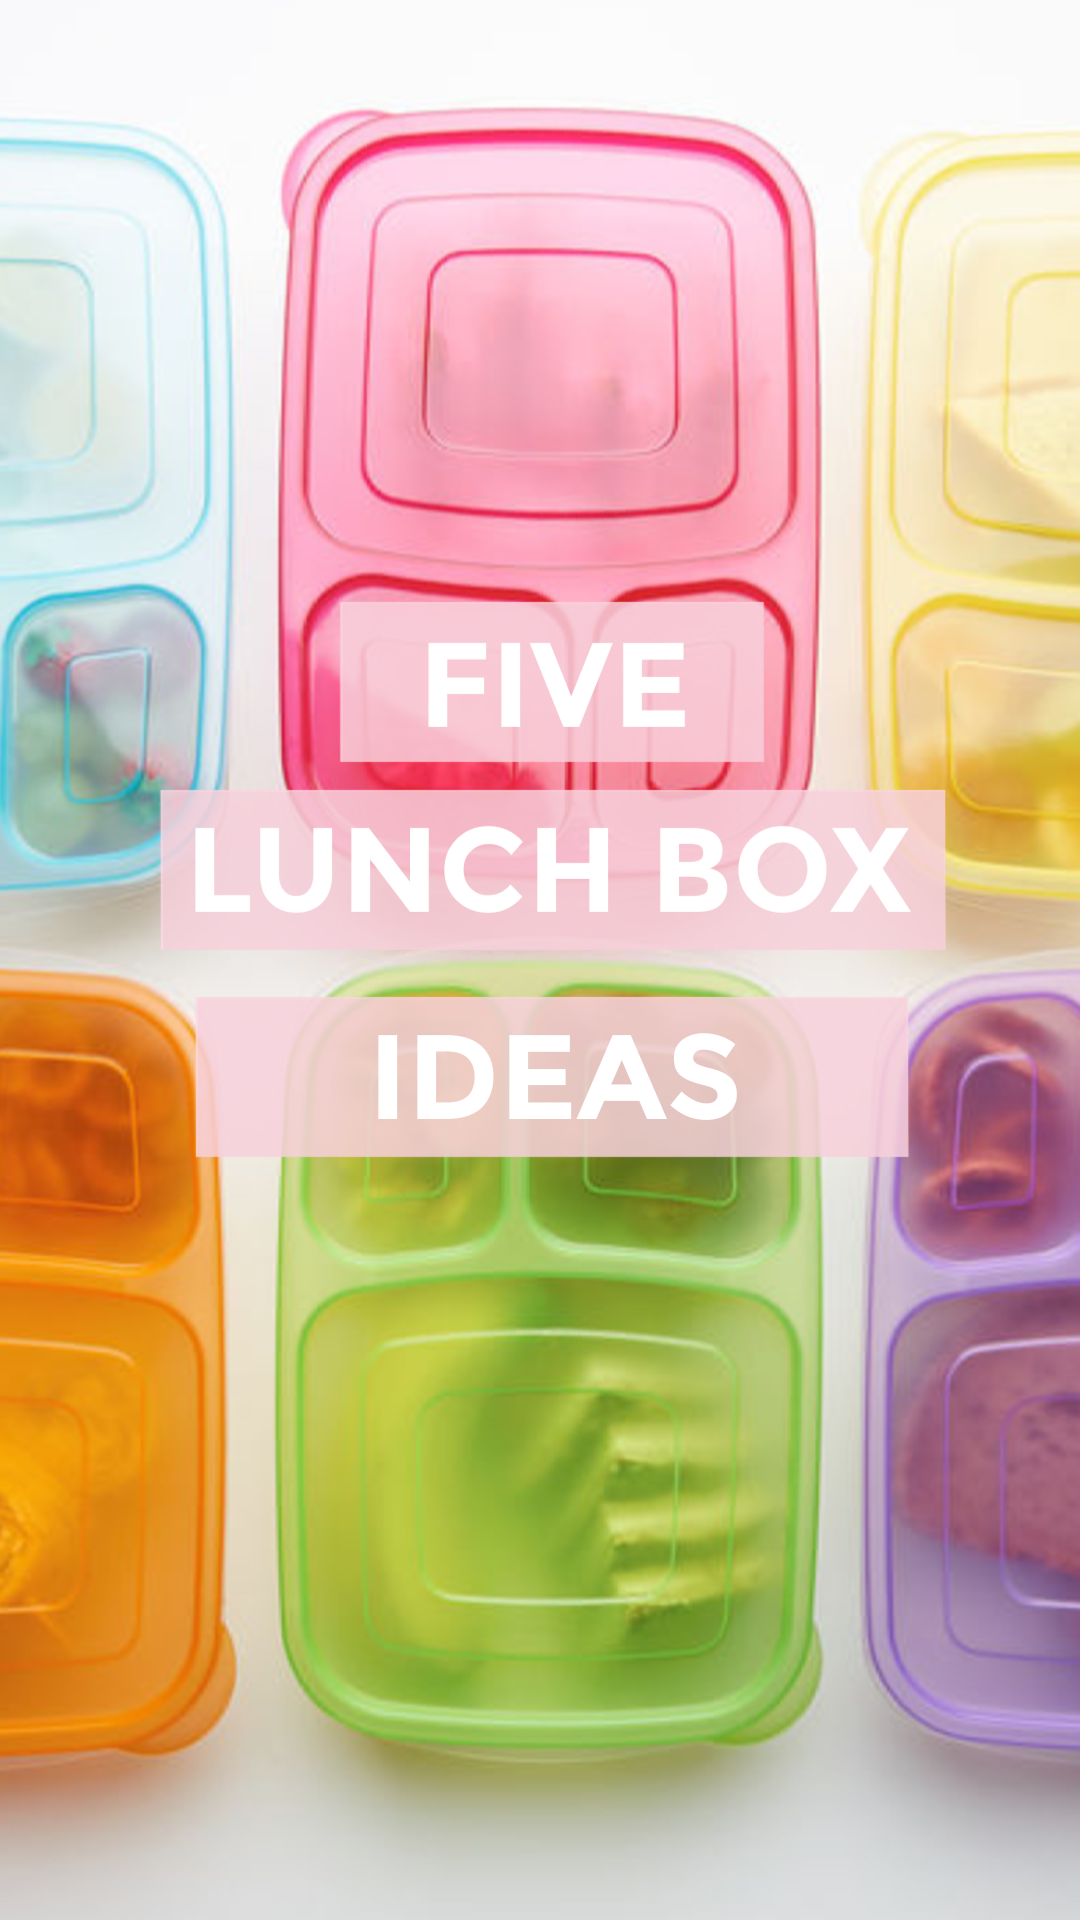 Five Lunch Box Ideas